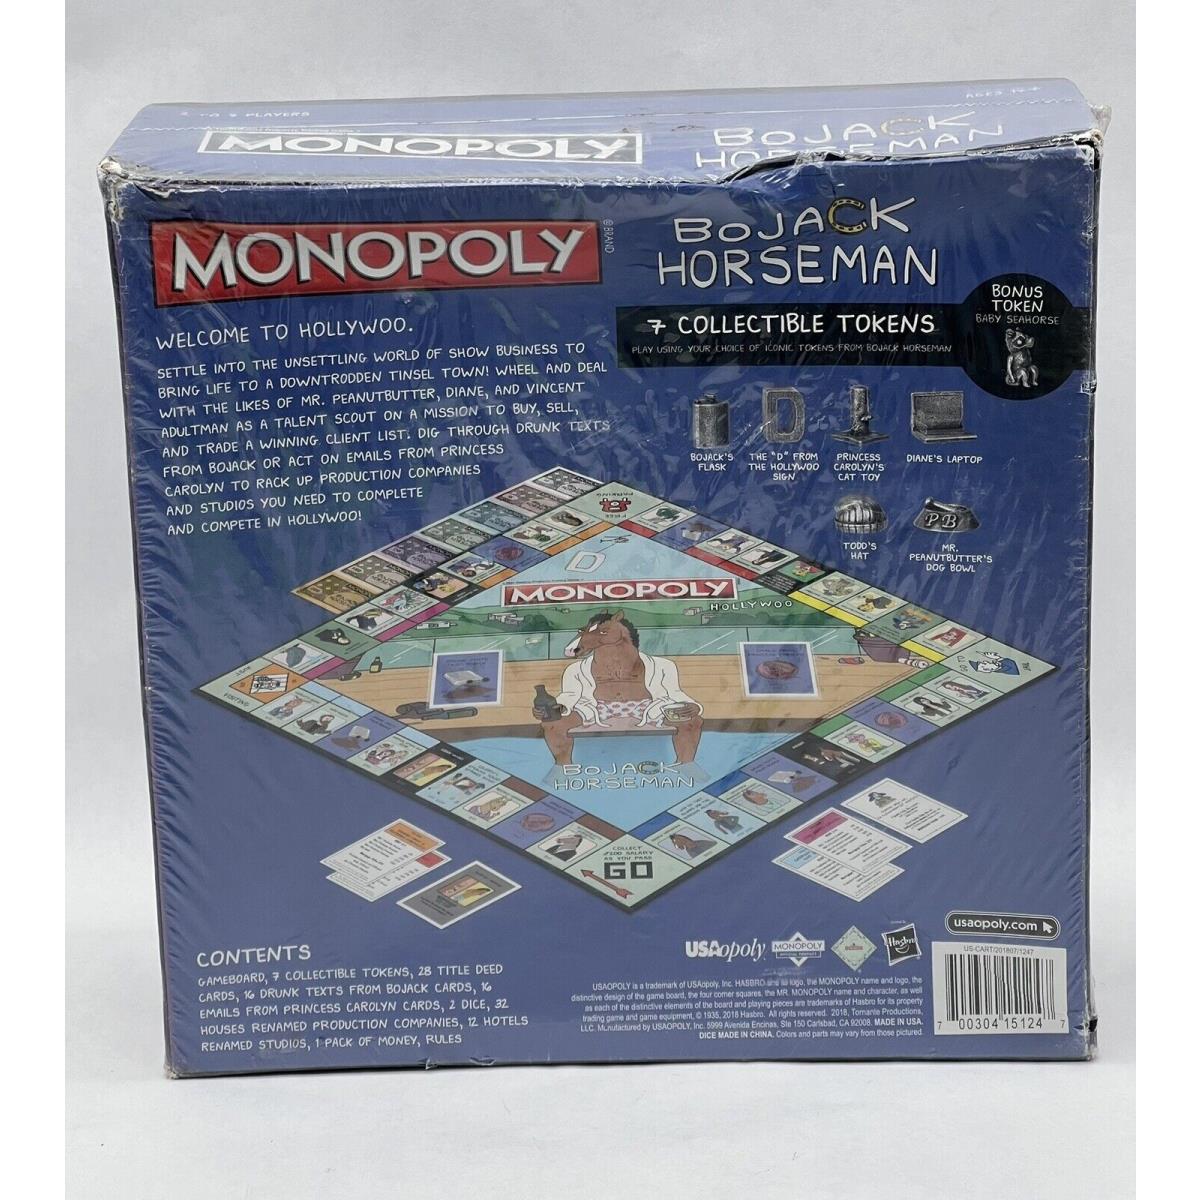 Bojack Horseman Ed. Monopoly Board Game Rare Box Gamestop Exclusive